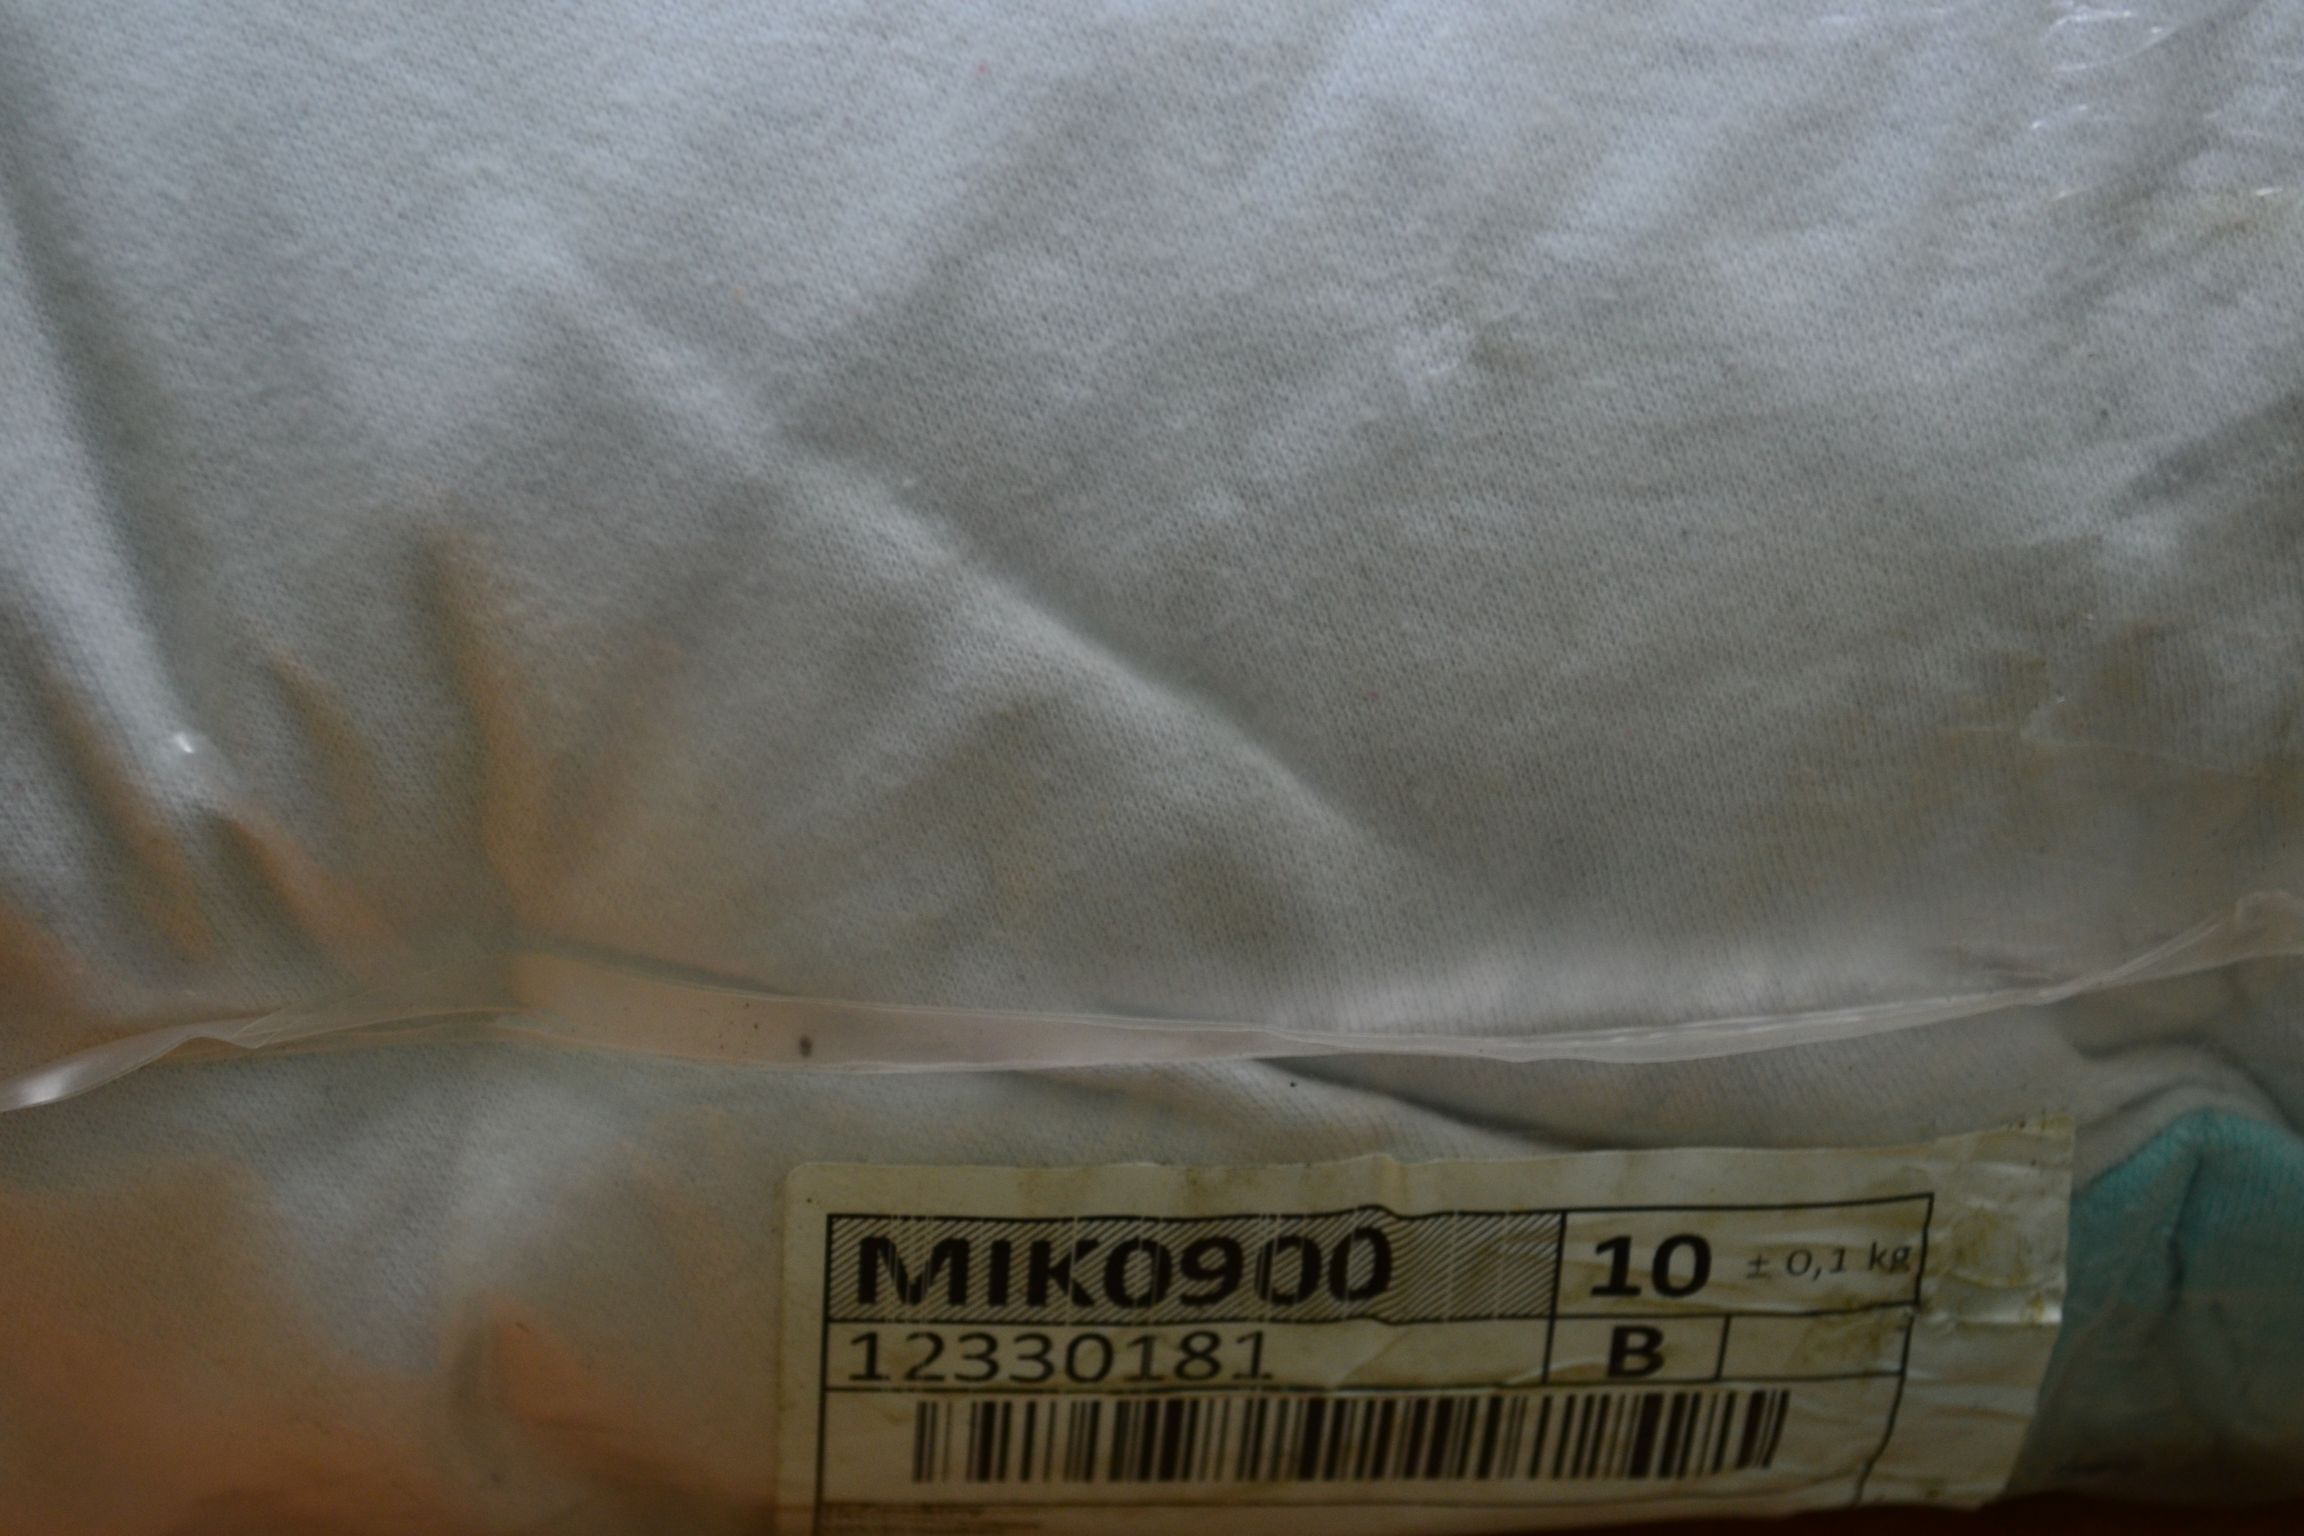 MIK0900; Толстовки; код мешка 12330181